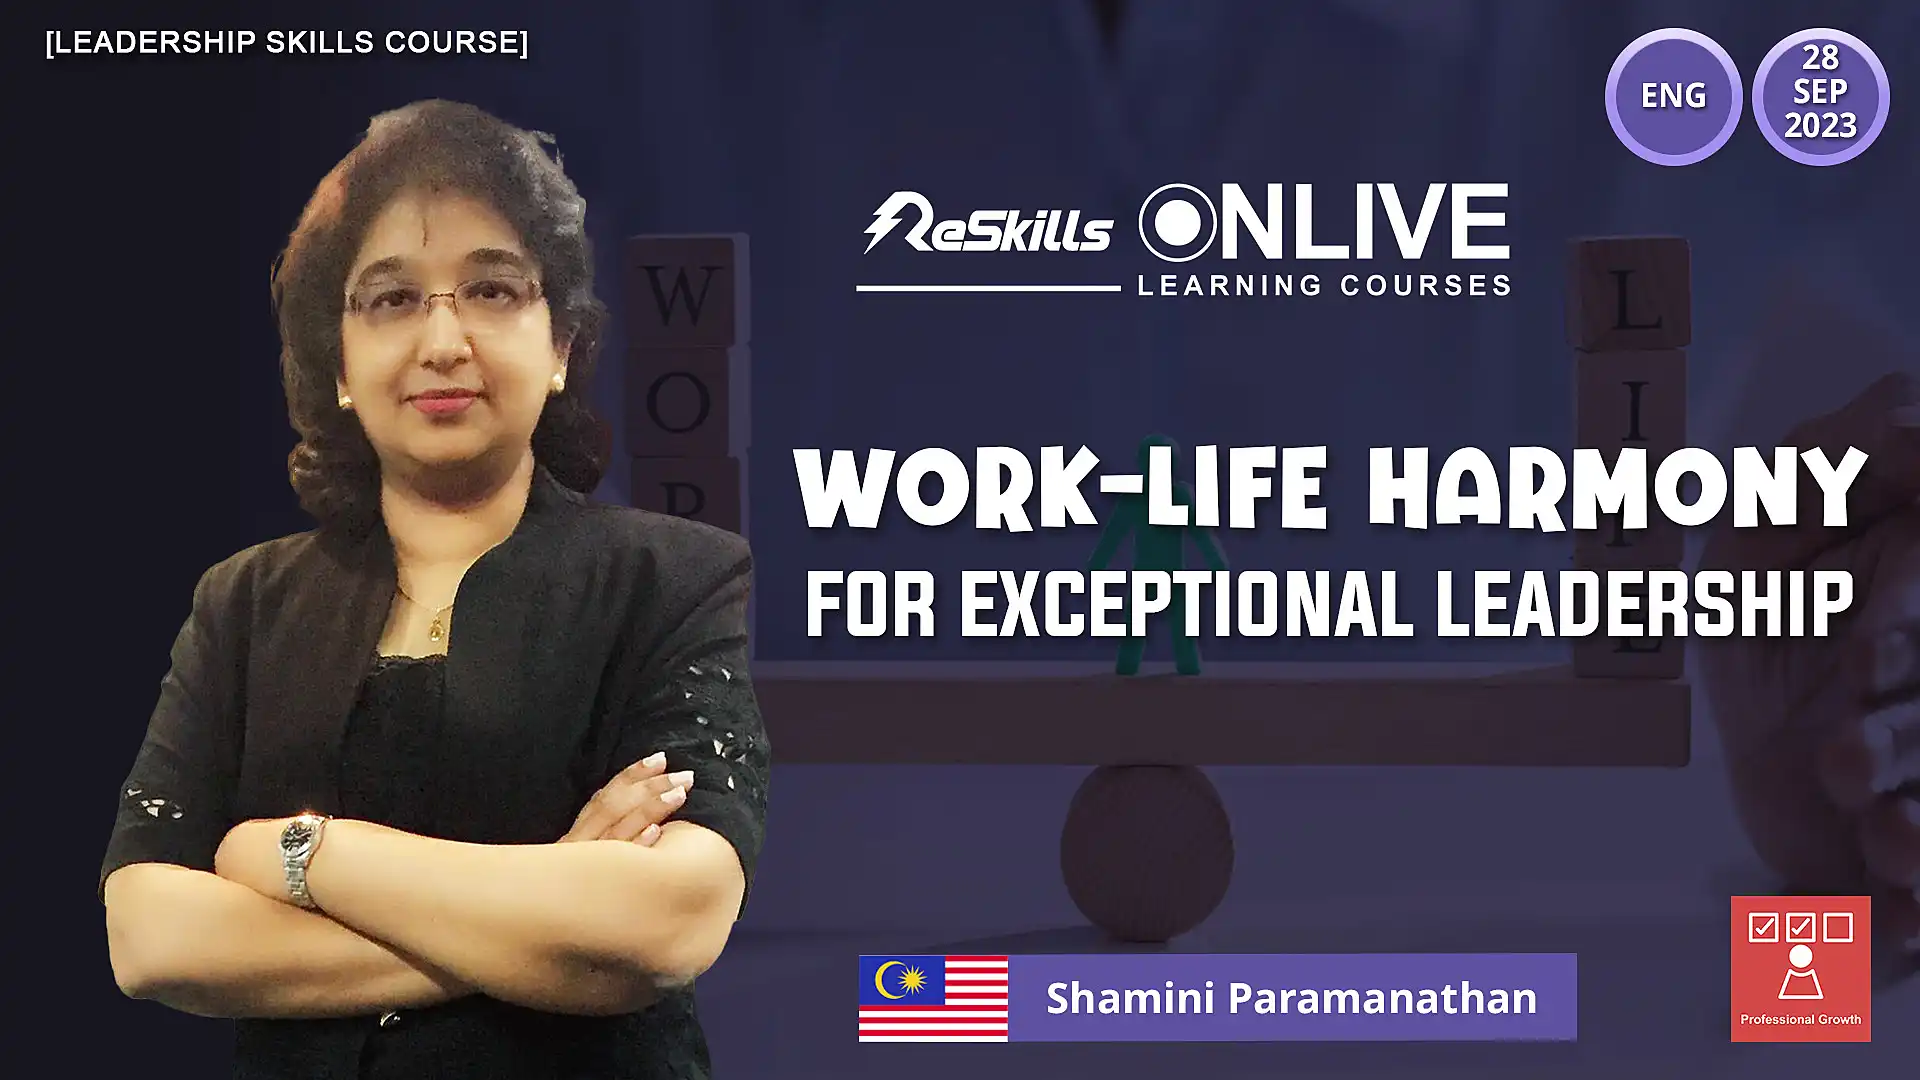 [Leadership Skills Course] Work-Life Harmony for Exceptional Leadership - ReSkills